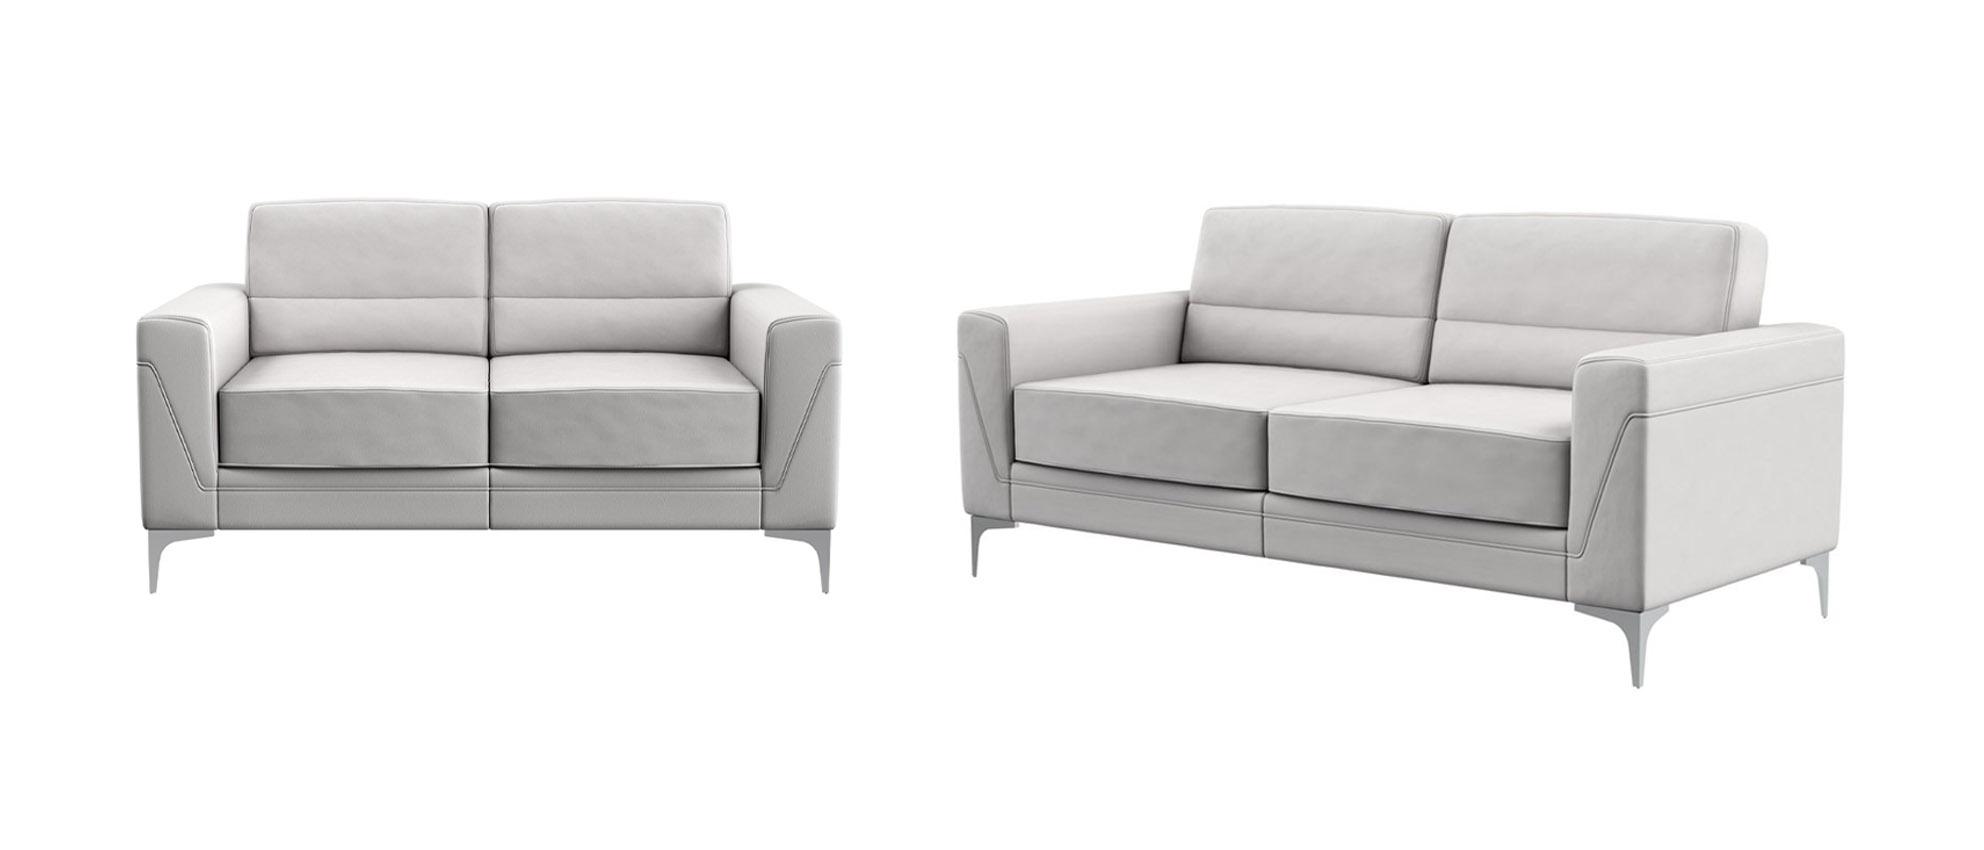 Transitional Sofa and Loveseat Set U6109 U6109-S/L in Light Gray PVC